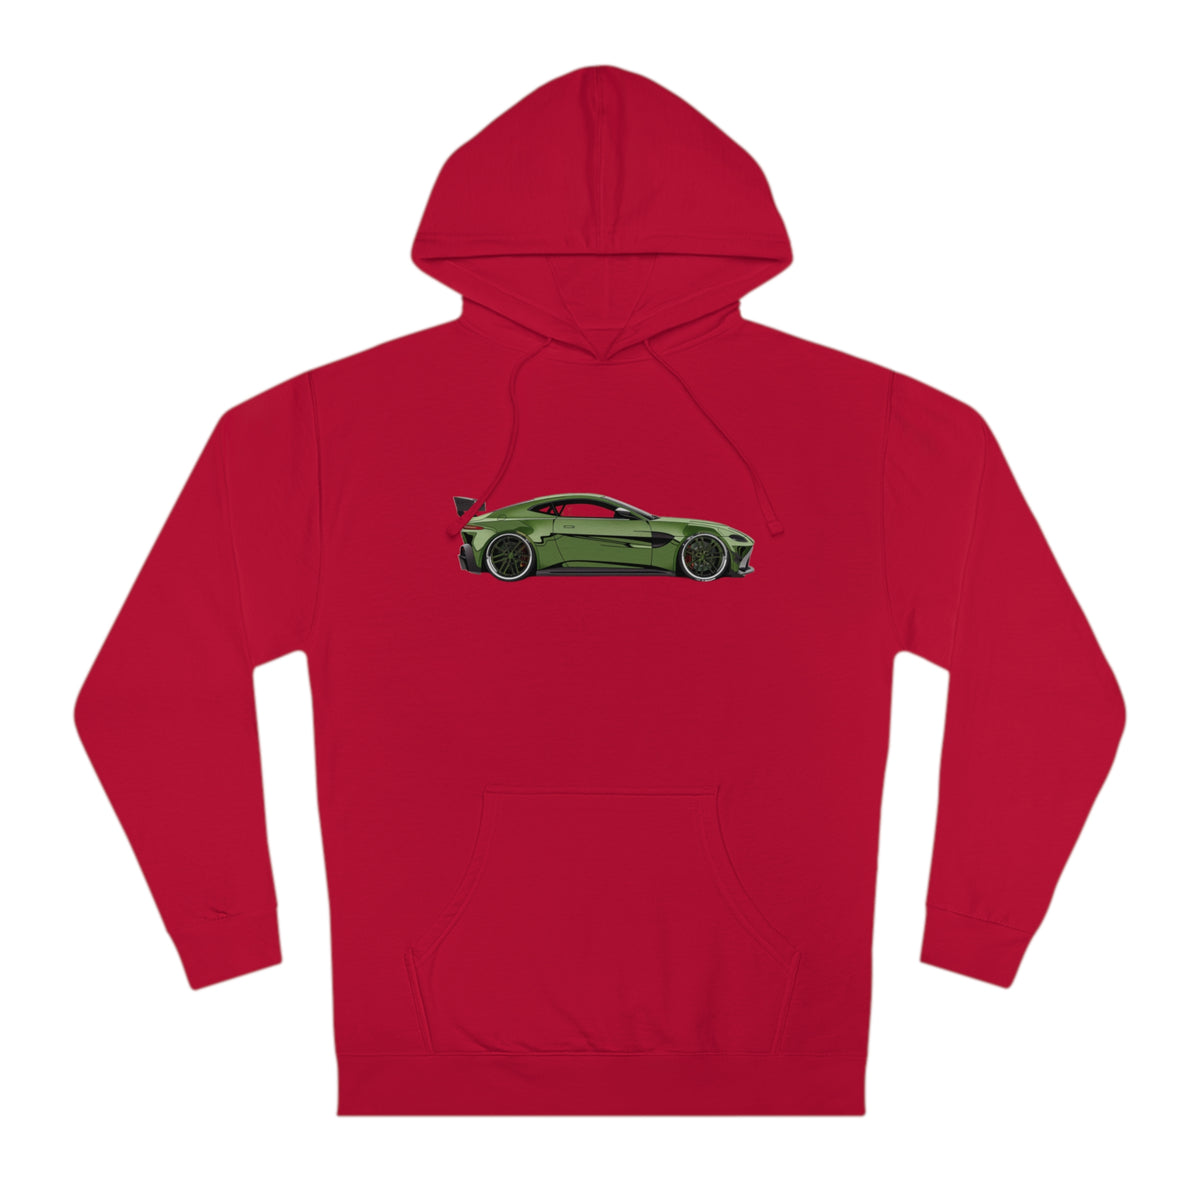 Racing Green Aston Martin Trackside Hoodie: Full-Throttle Fashion Hooded Sweatshirt